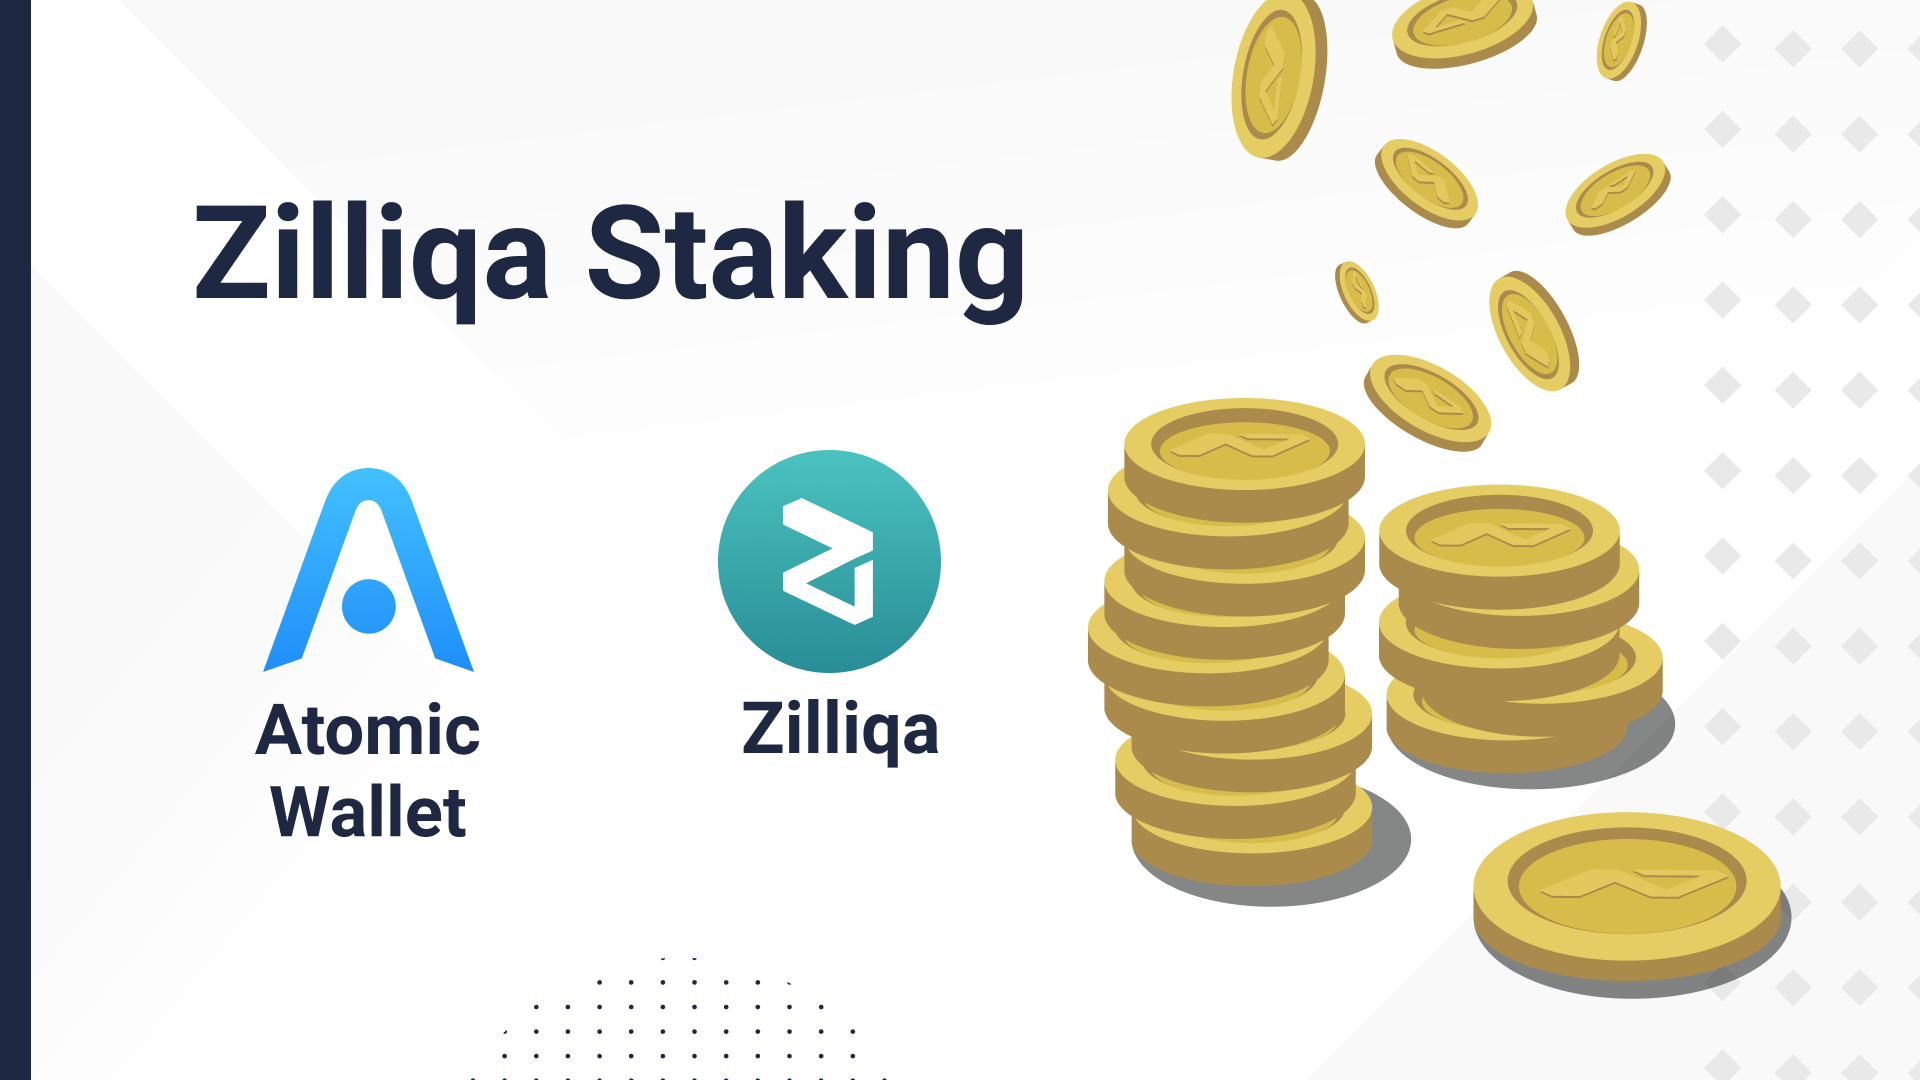 Zilliqa staking rewards adjusted to reduce inflation